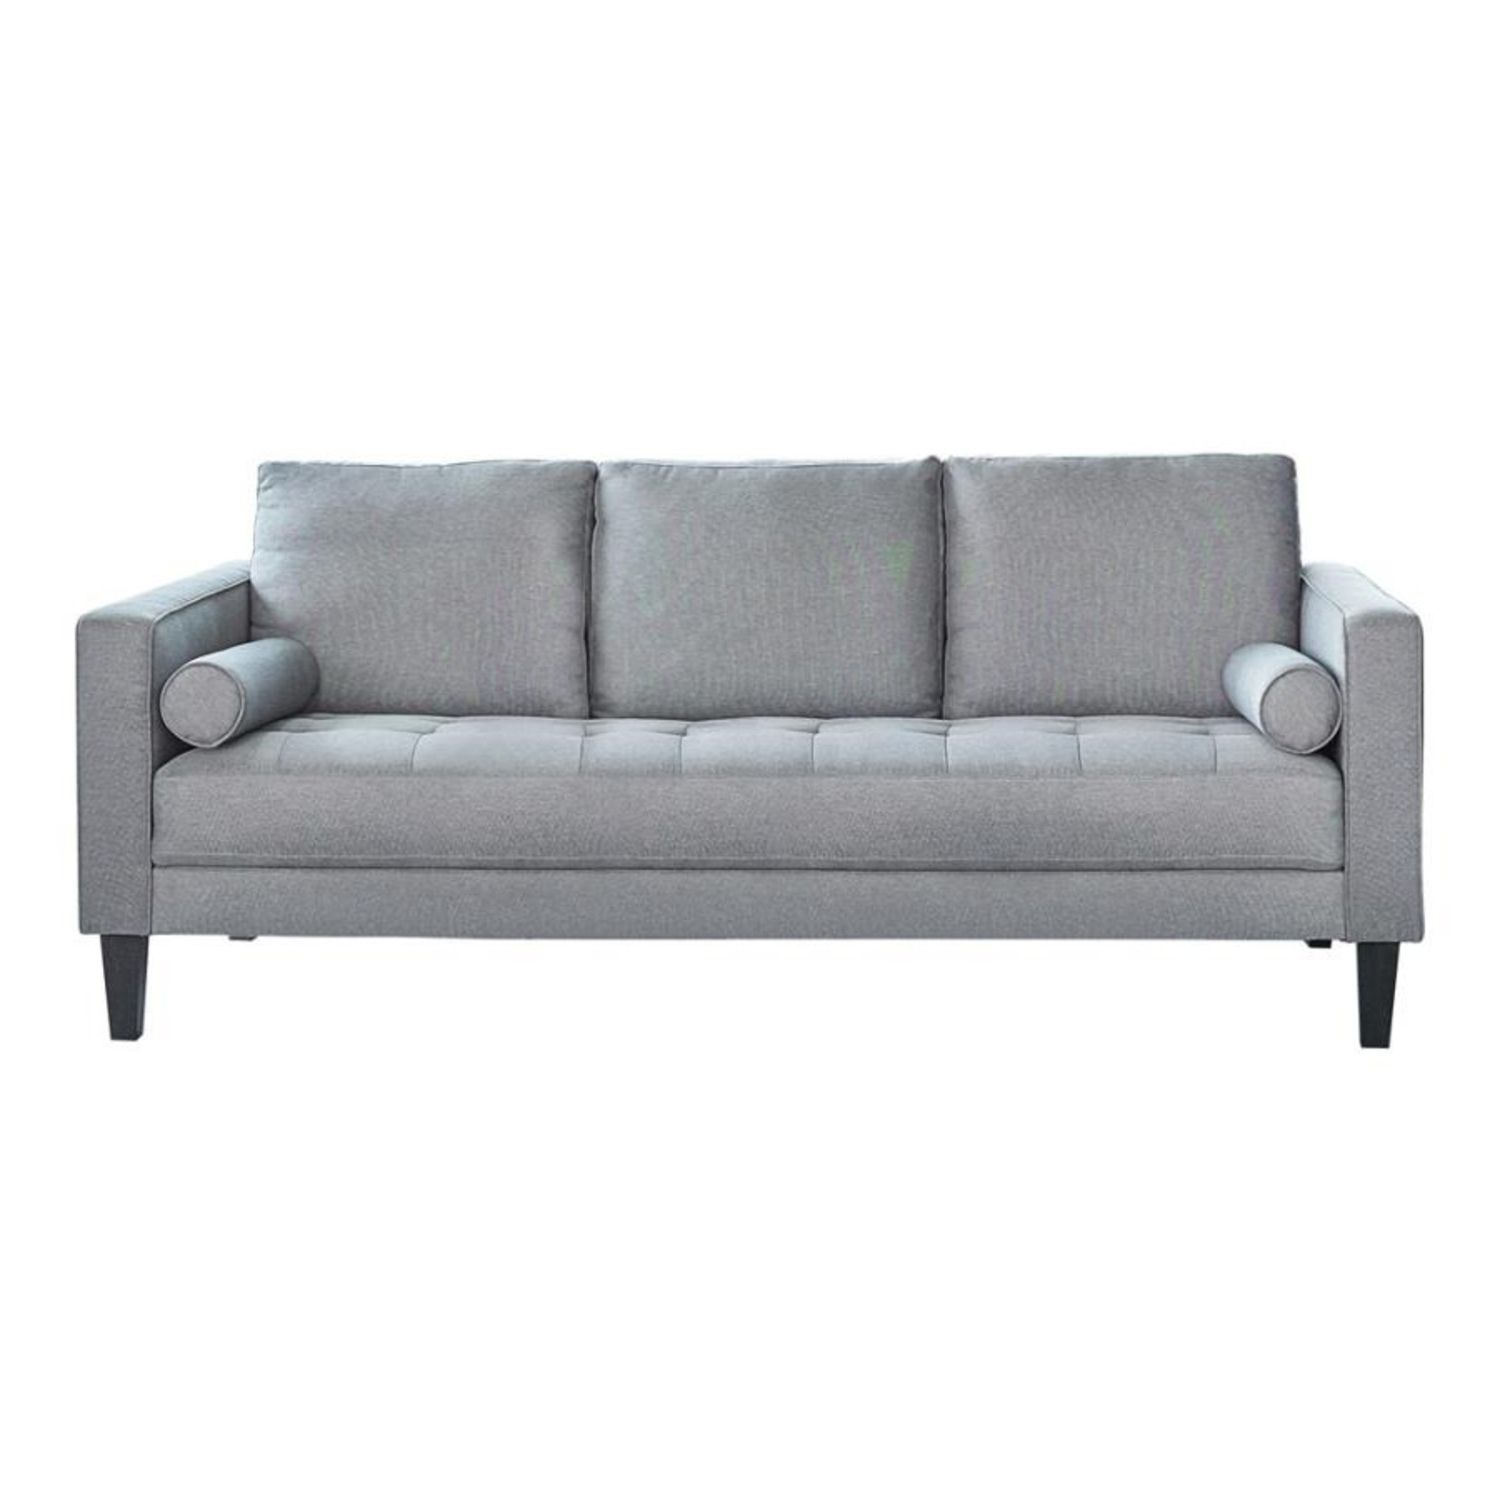 Modern Sofa In Linen Like Charcoal Upholstery – Aptdeco Intended For Light Charcoal Linen Sofas (View 15 of 20)